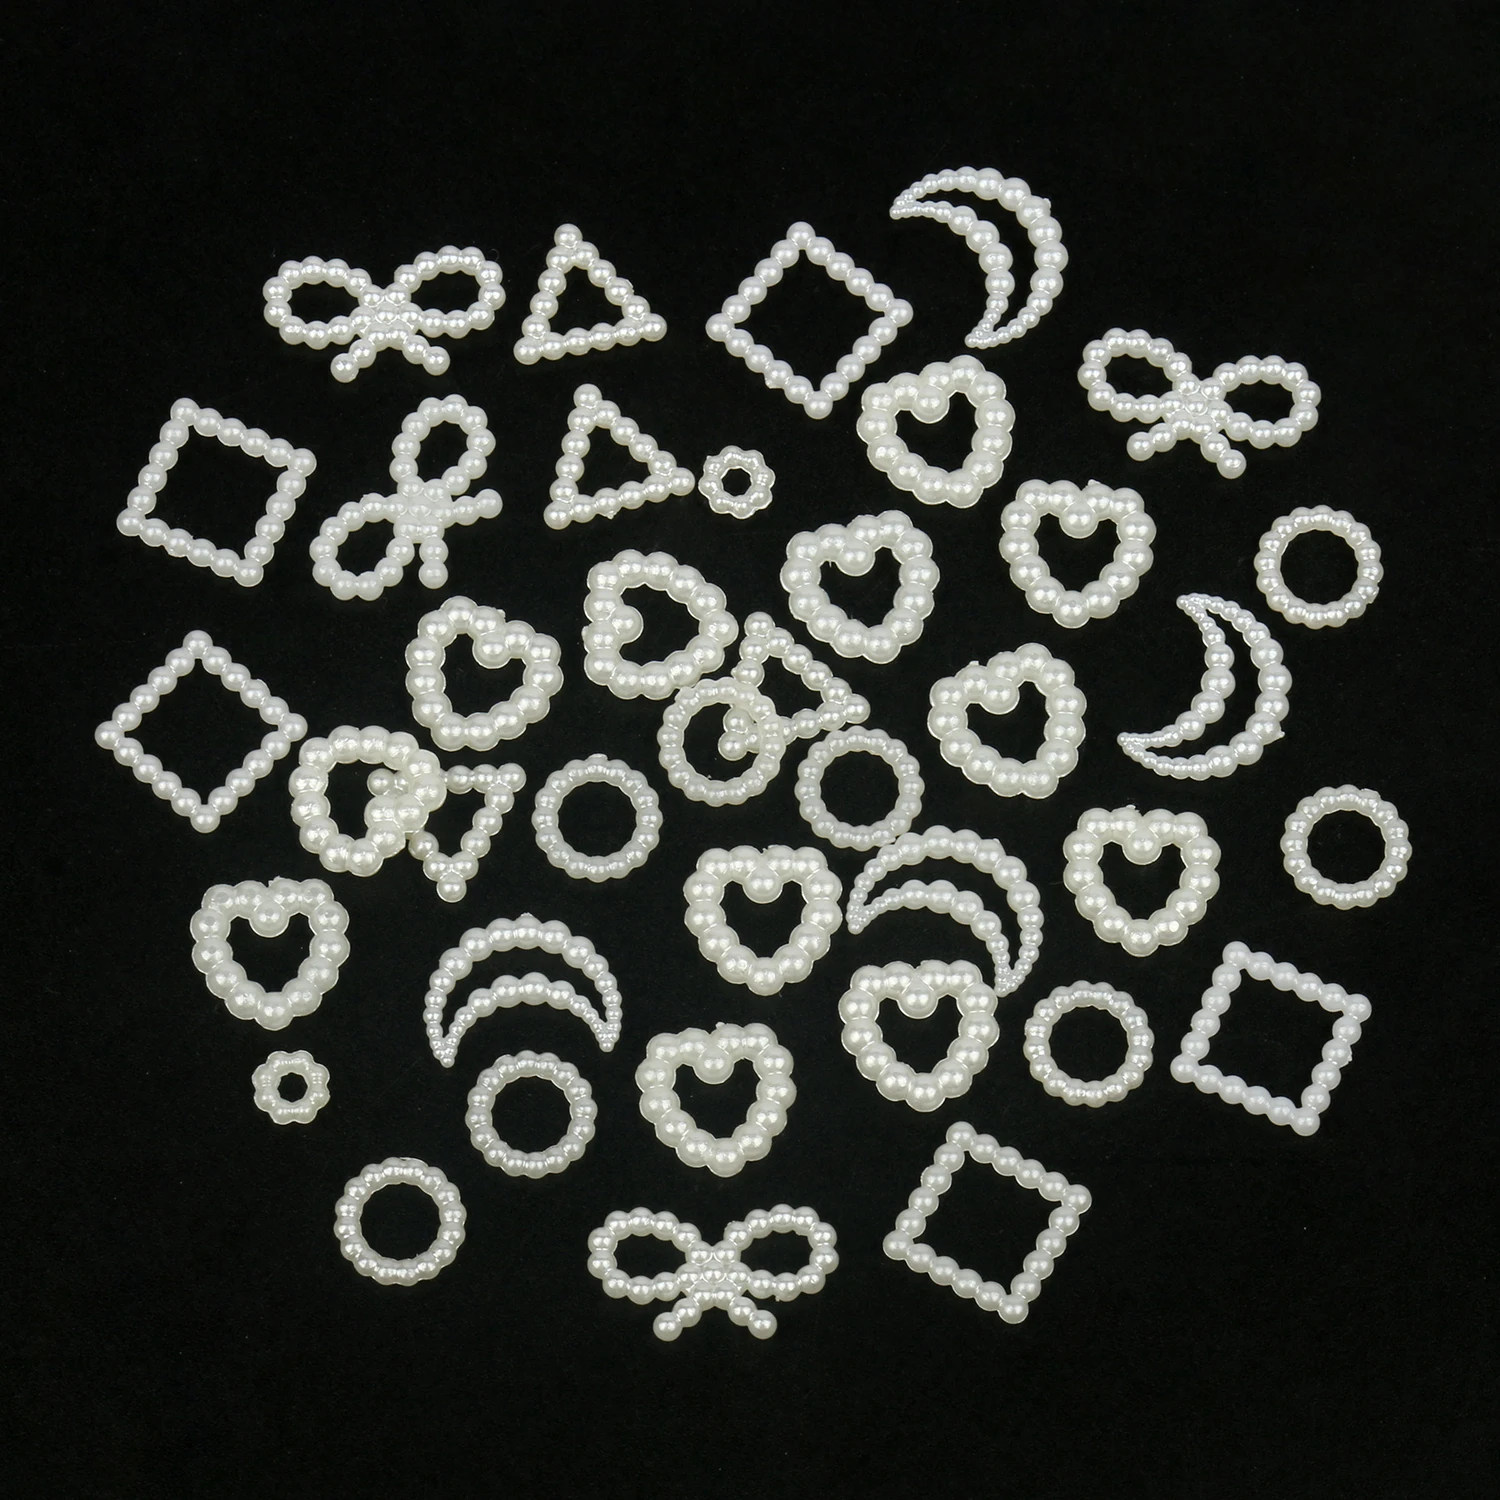 100pcs 10mm Flat Beads Heart Star Shape Beads Craft Imitation Pearls Flatback For Art Scrapbooking Decoration DIY Jewelry Making